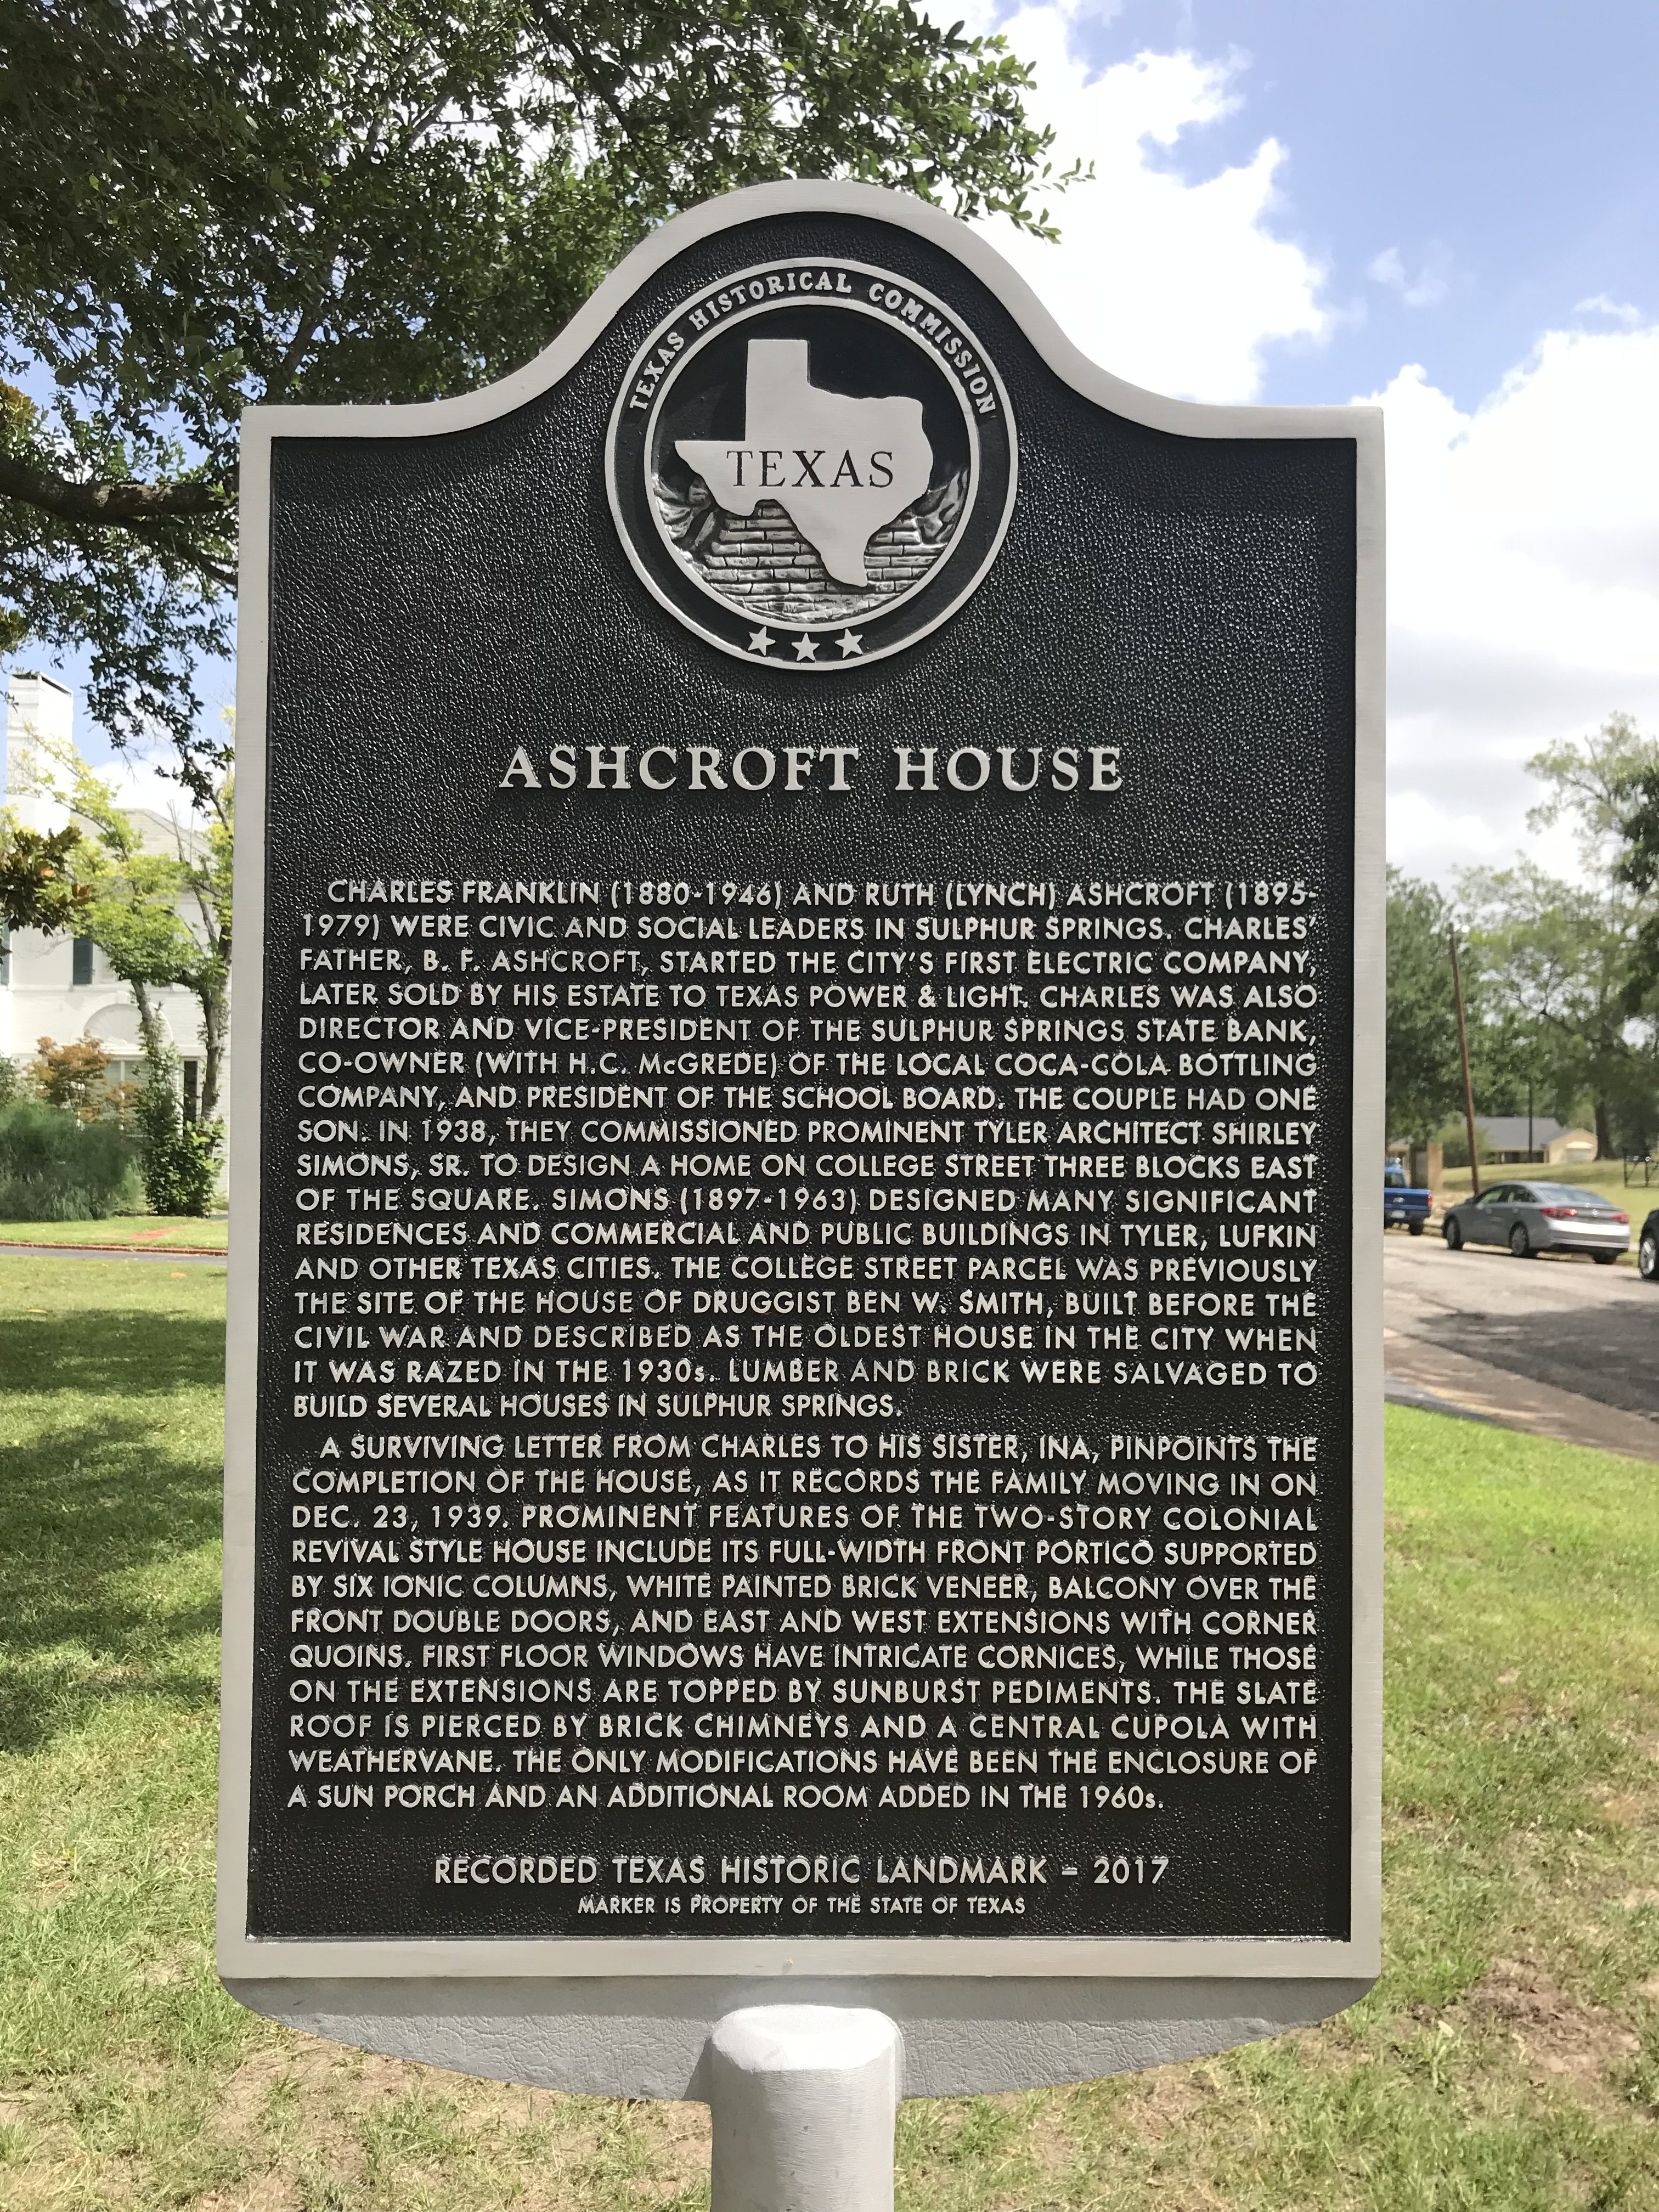 Historic Ashcroft House in Sulphur Springs Designated Recorded Texas Historical Landmark.